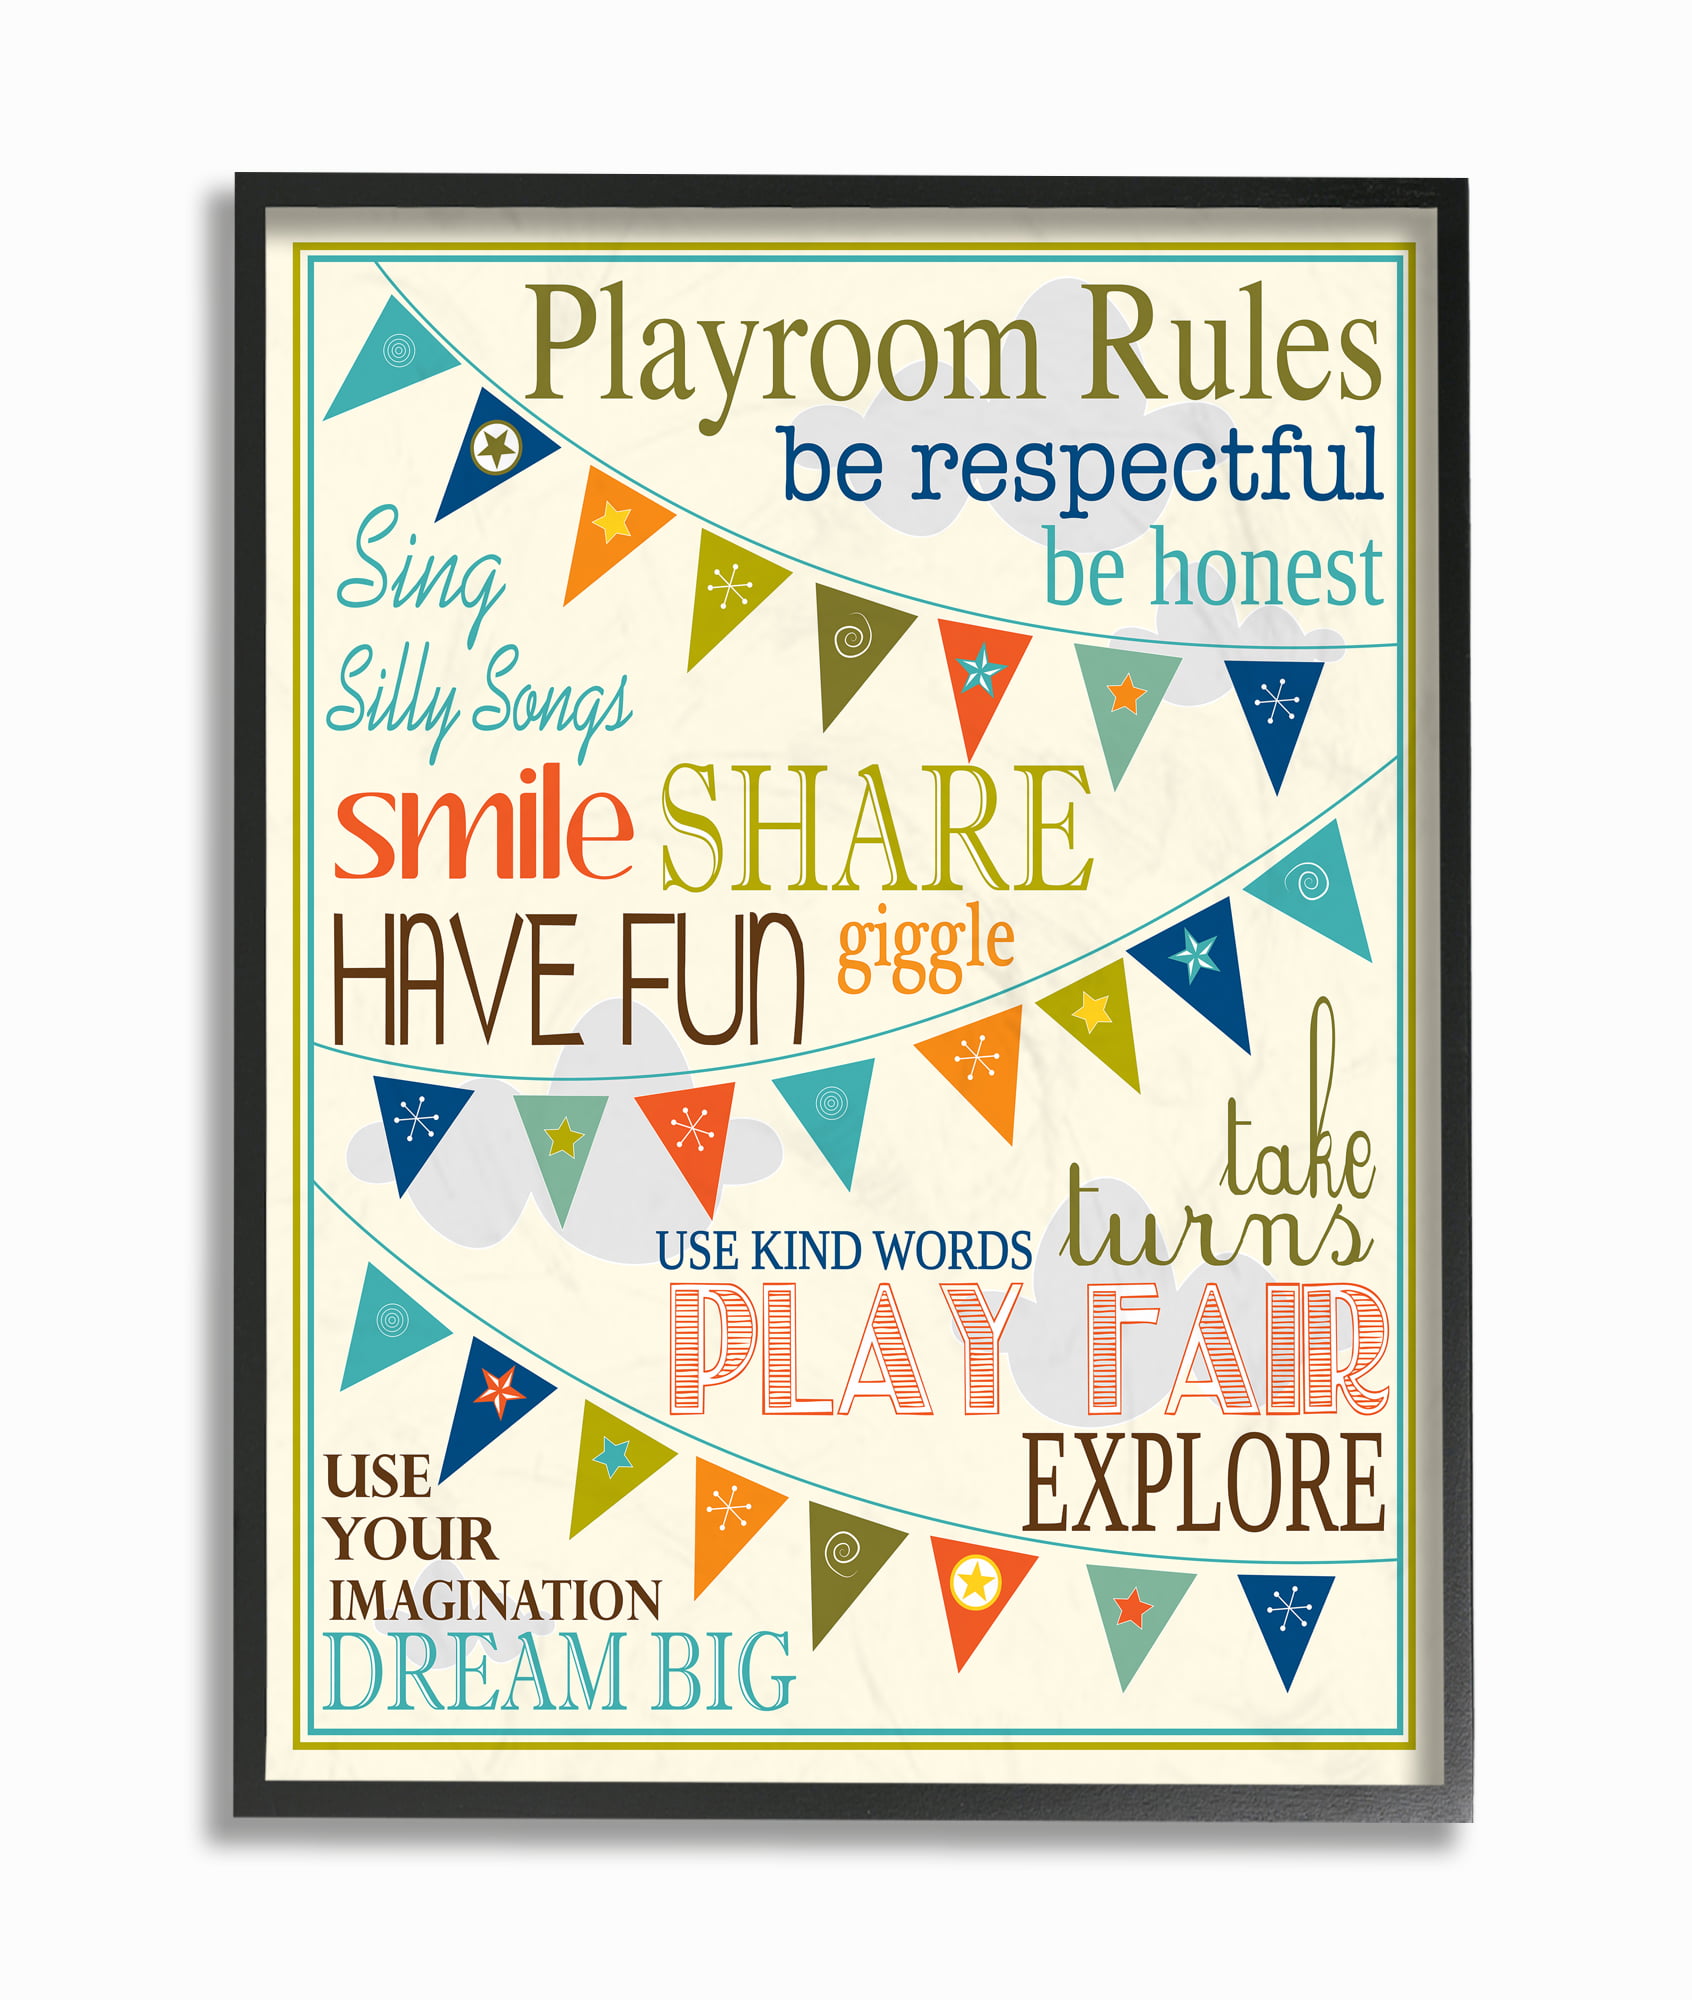 13 x 19 Stupell Industries Rainbow Chalkboard Playroom Rules Wall Plaque Design by Artist Debbie Dewitt